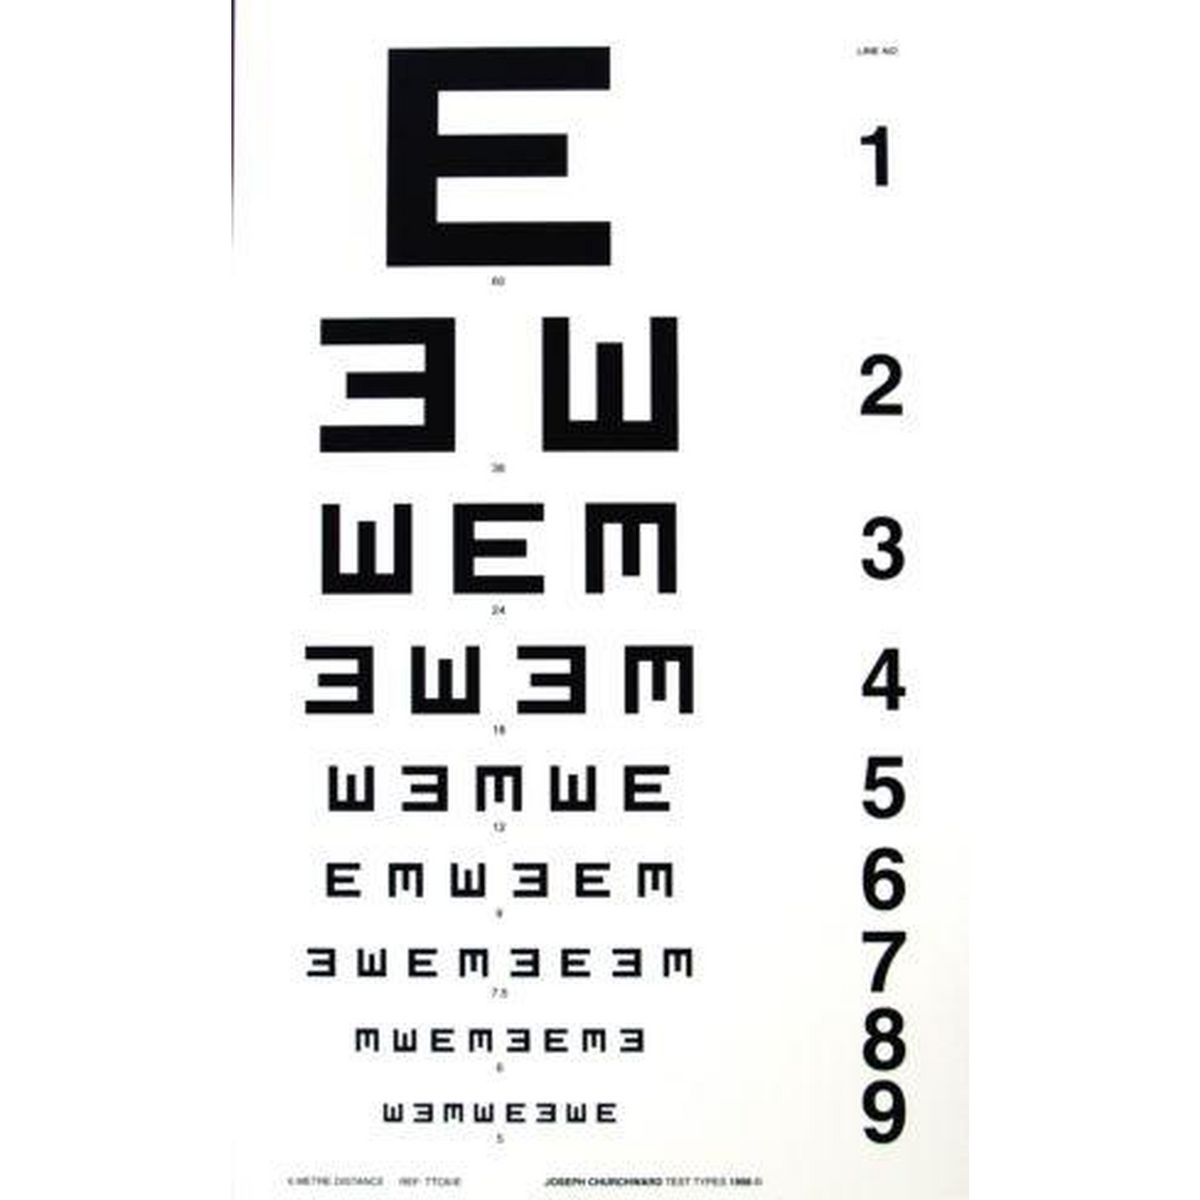 snellen-eye-test-charts-interpretation-precision-vision-vrogue